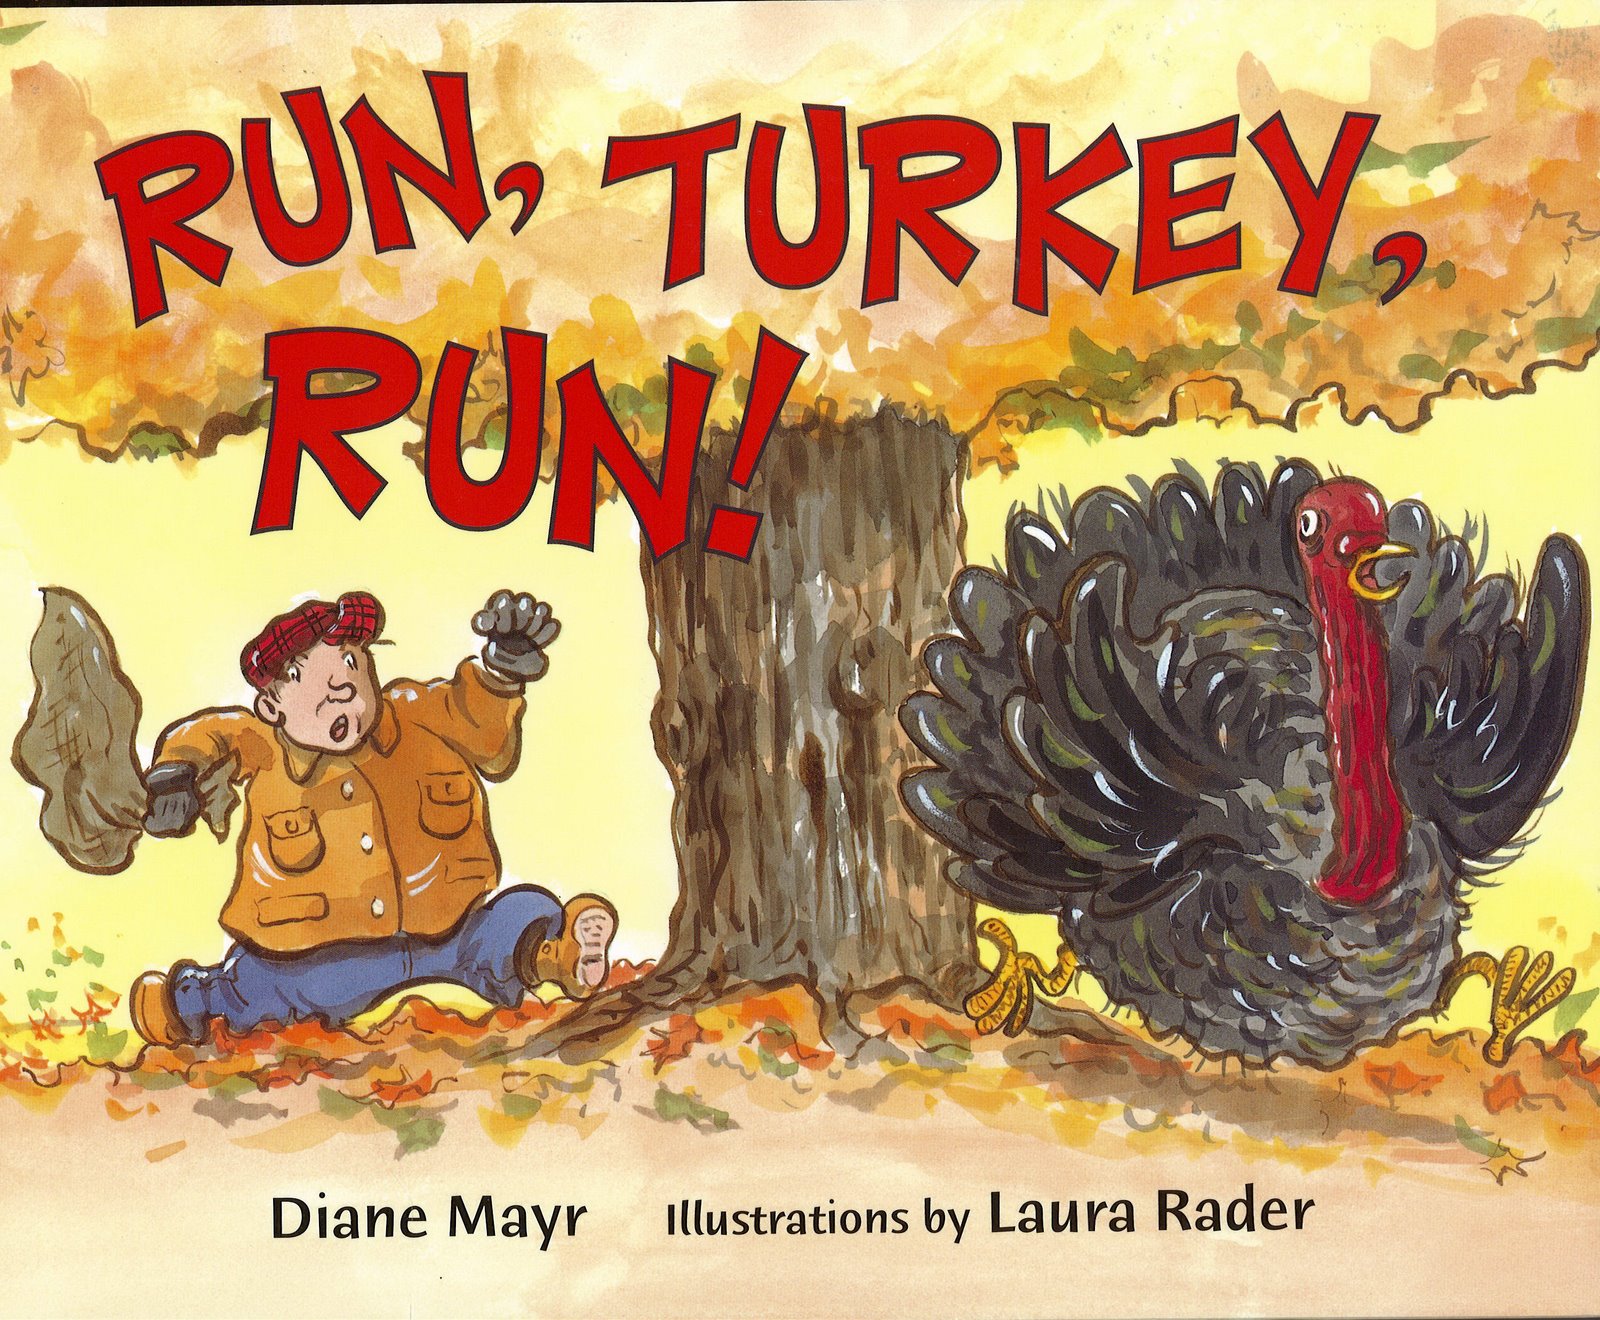 [run+turkey+run.jpg]